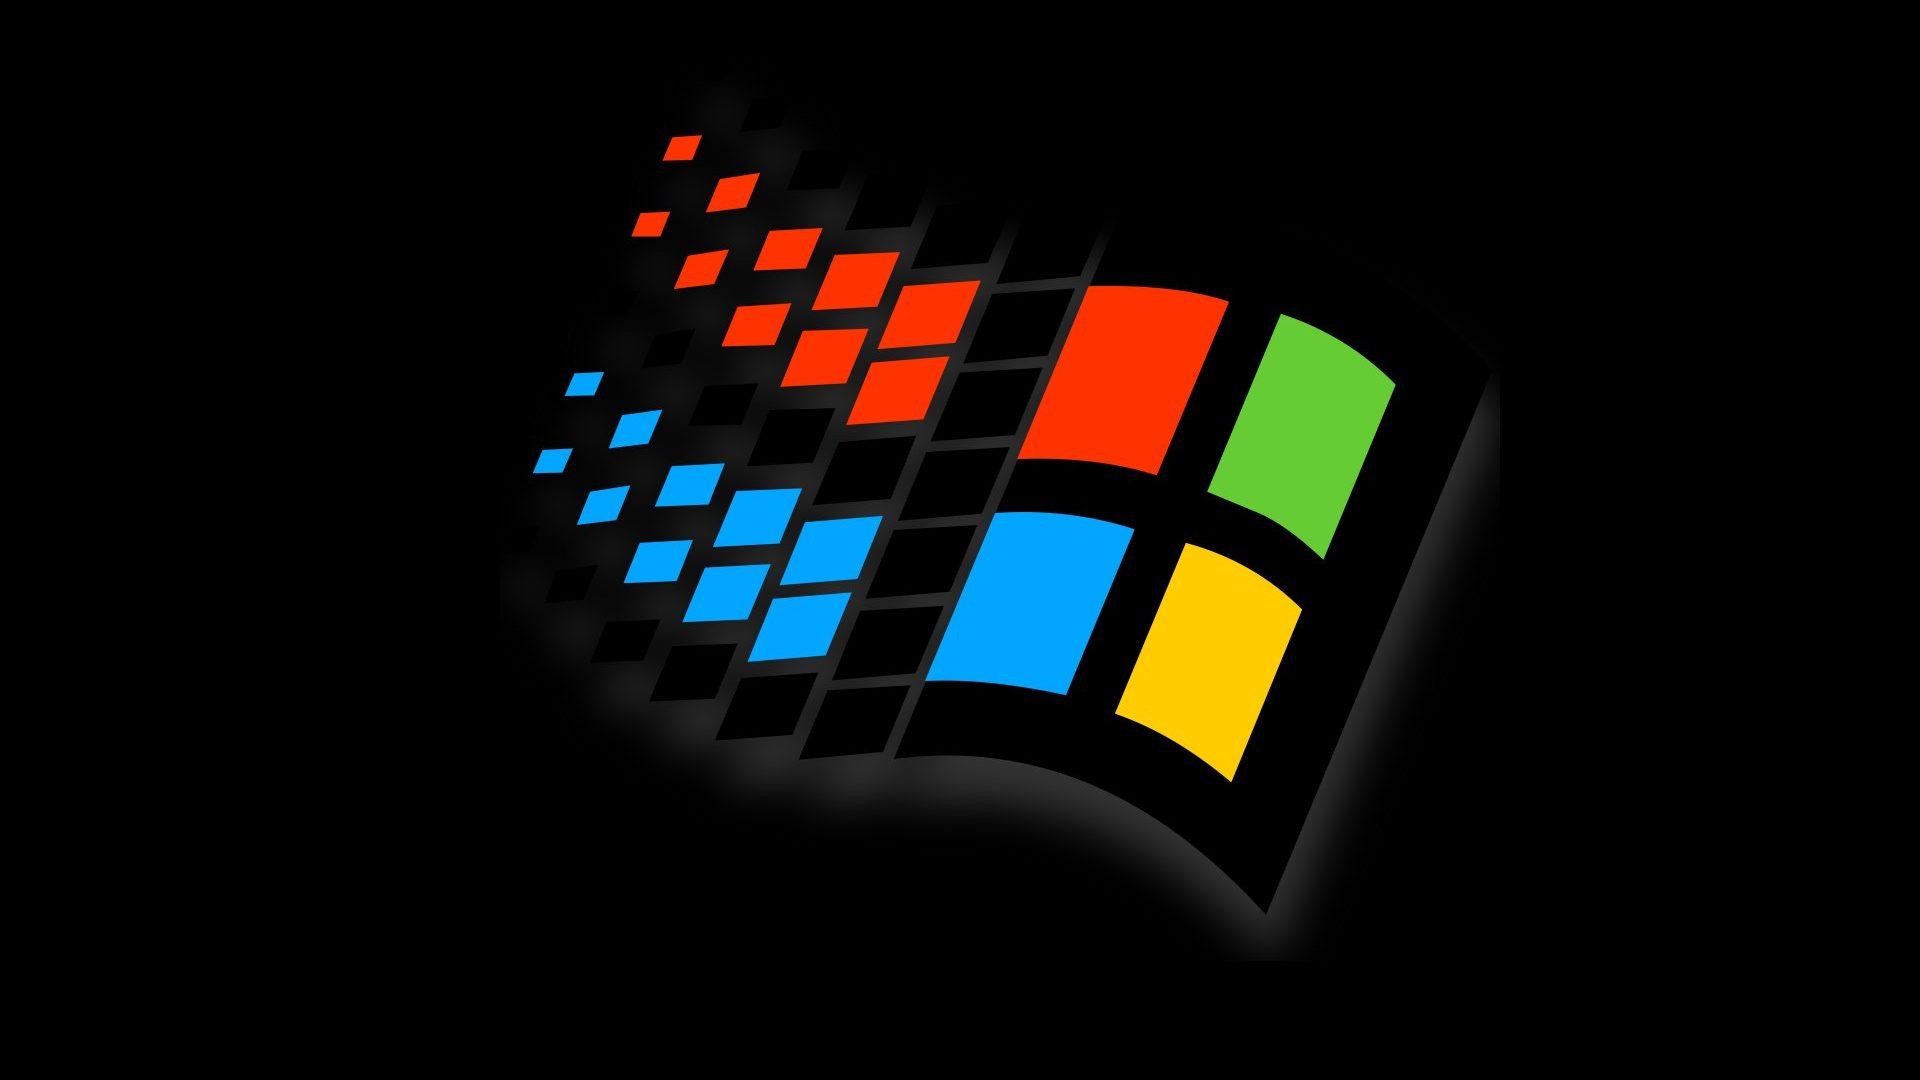 Windows 98 Logo - HD Windows 98 Logo Wallpaper